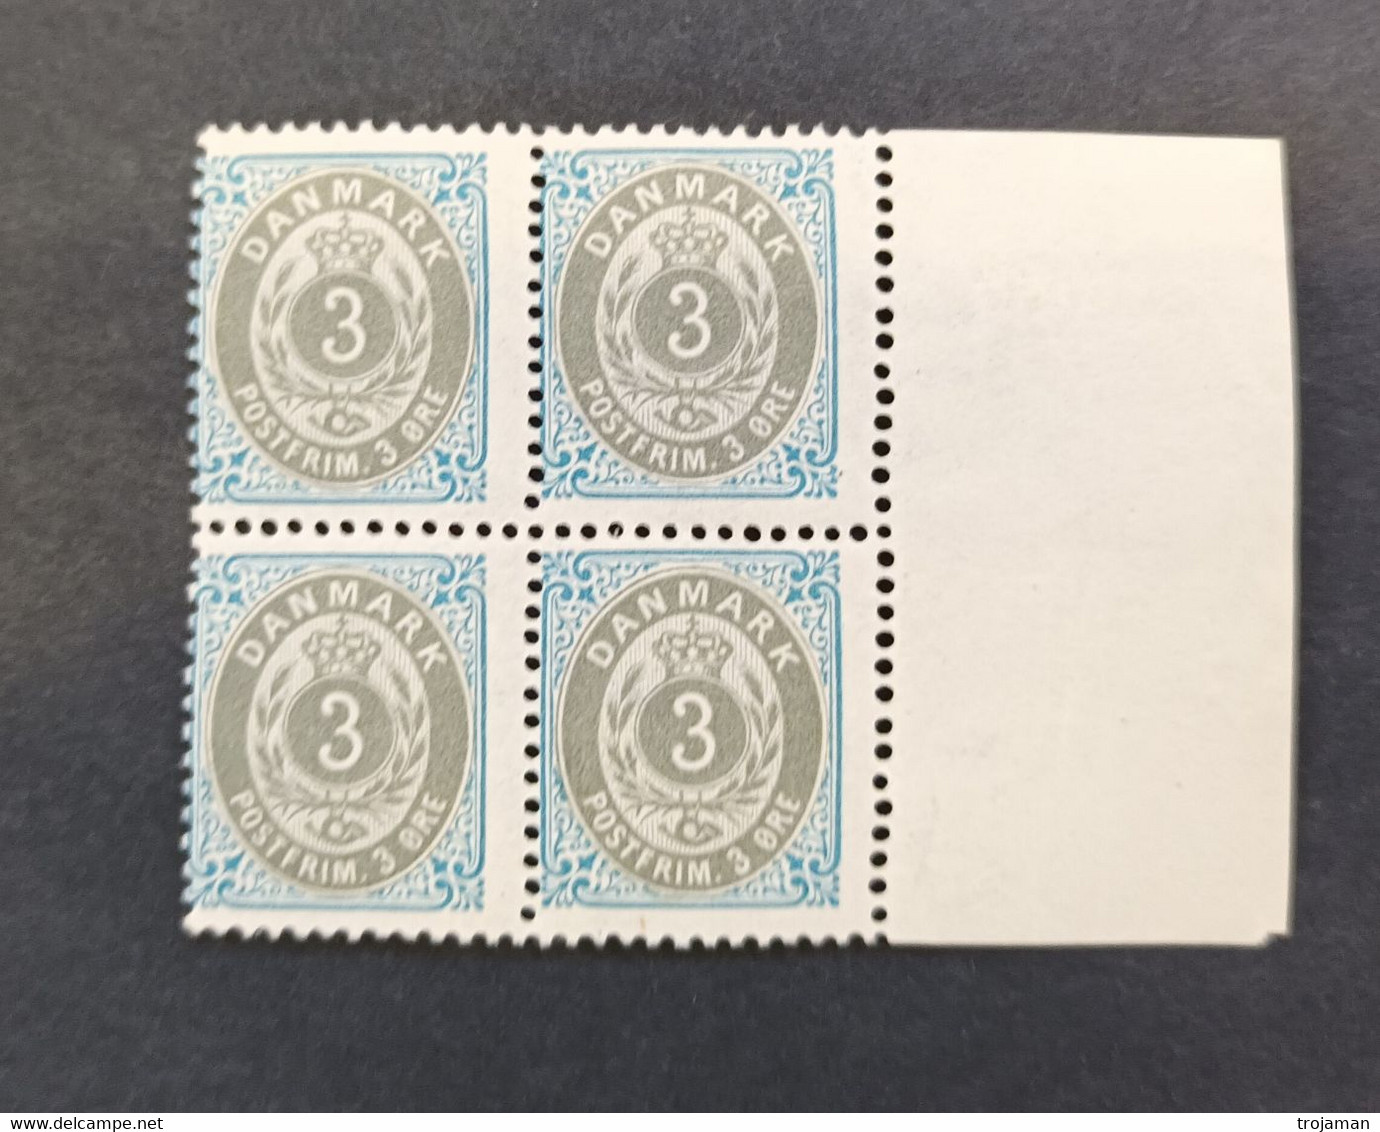 EX-PR-22-04 DANEMARK 4 STAMPS IN BLOCK 0F FOUR   MICHEL # 22IIYBb  MNH** = 120 Euro Minimum. - Unused Stamps